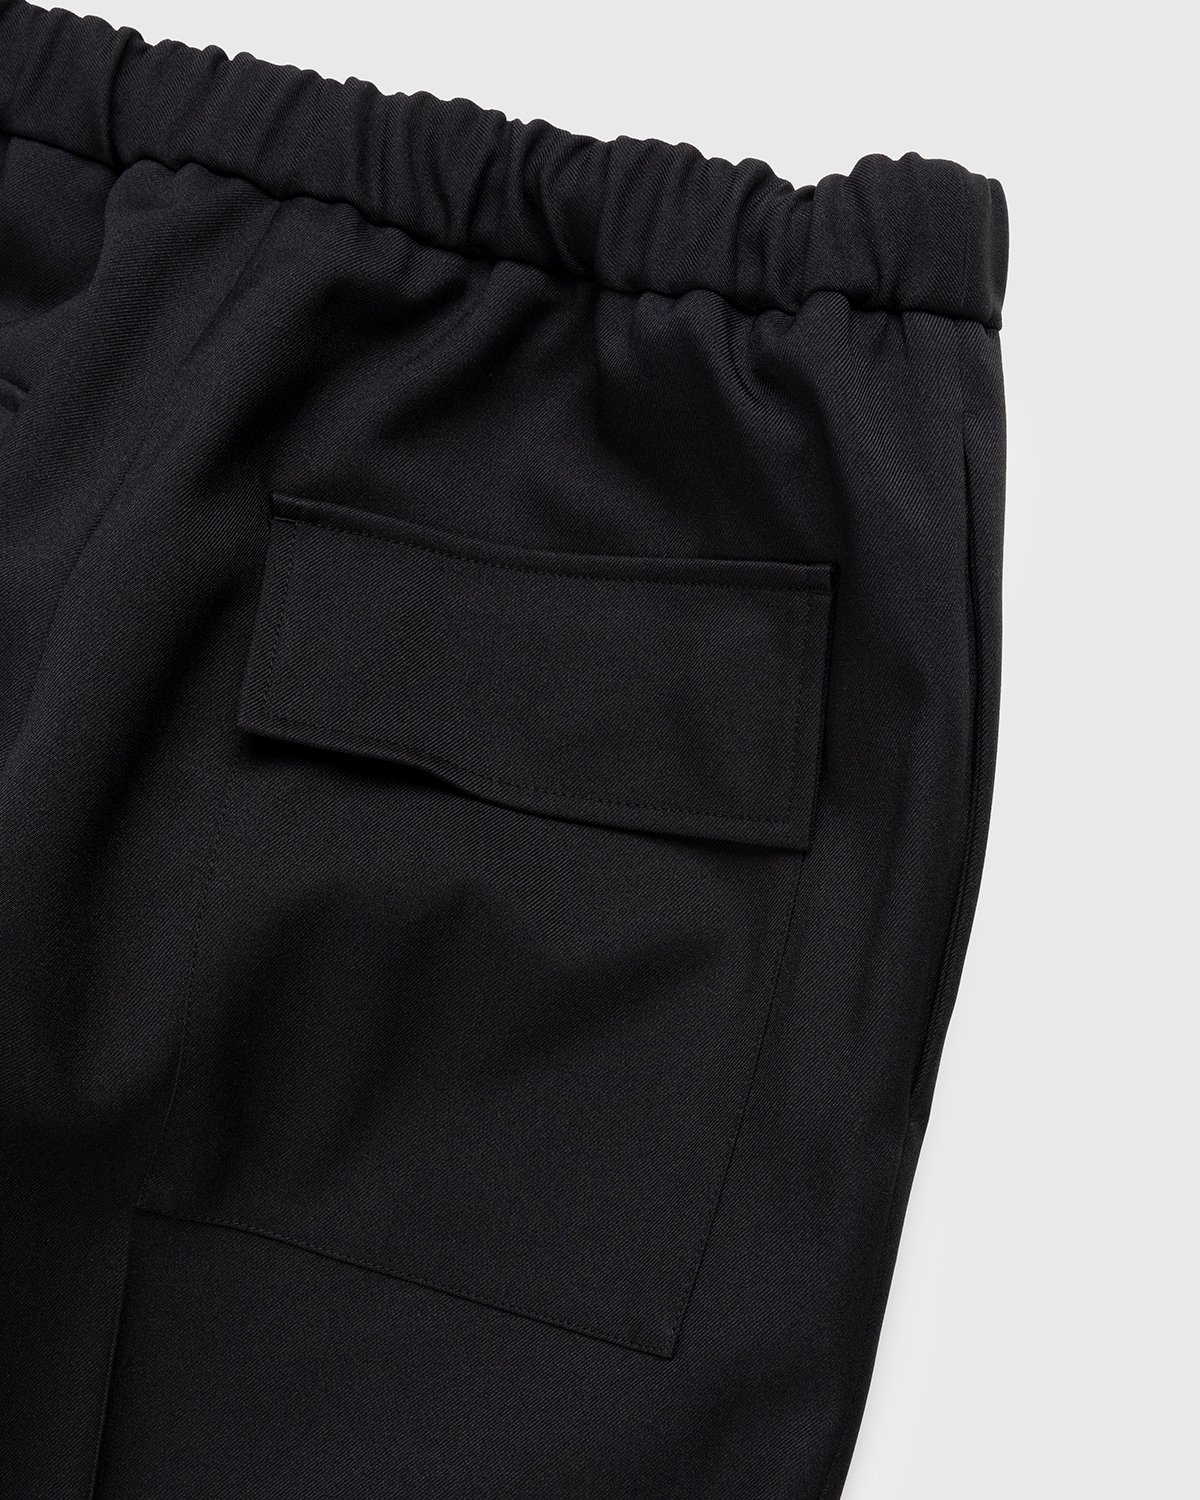 Jil Sander - Trouser D 09 AW 20 Black - Clothing - Black - Image 4